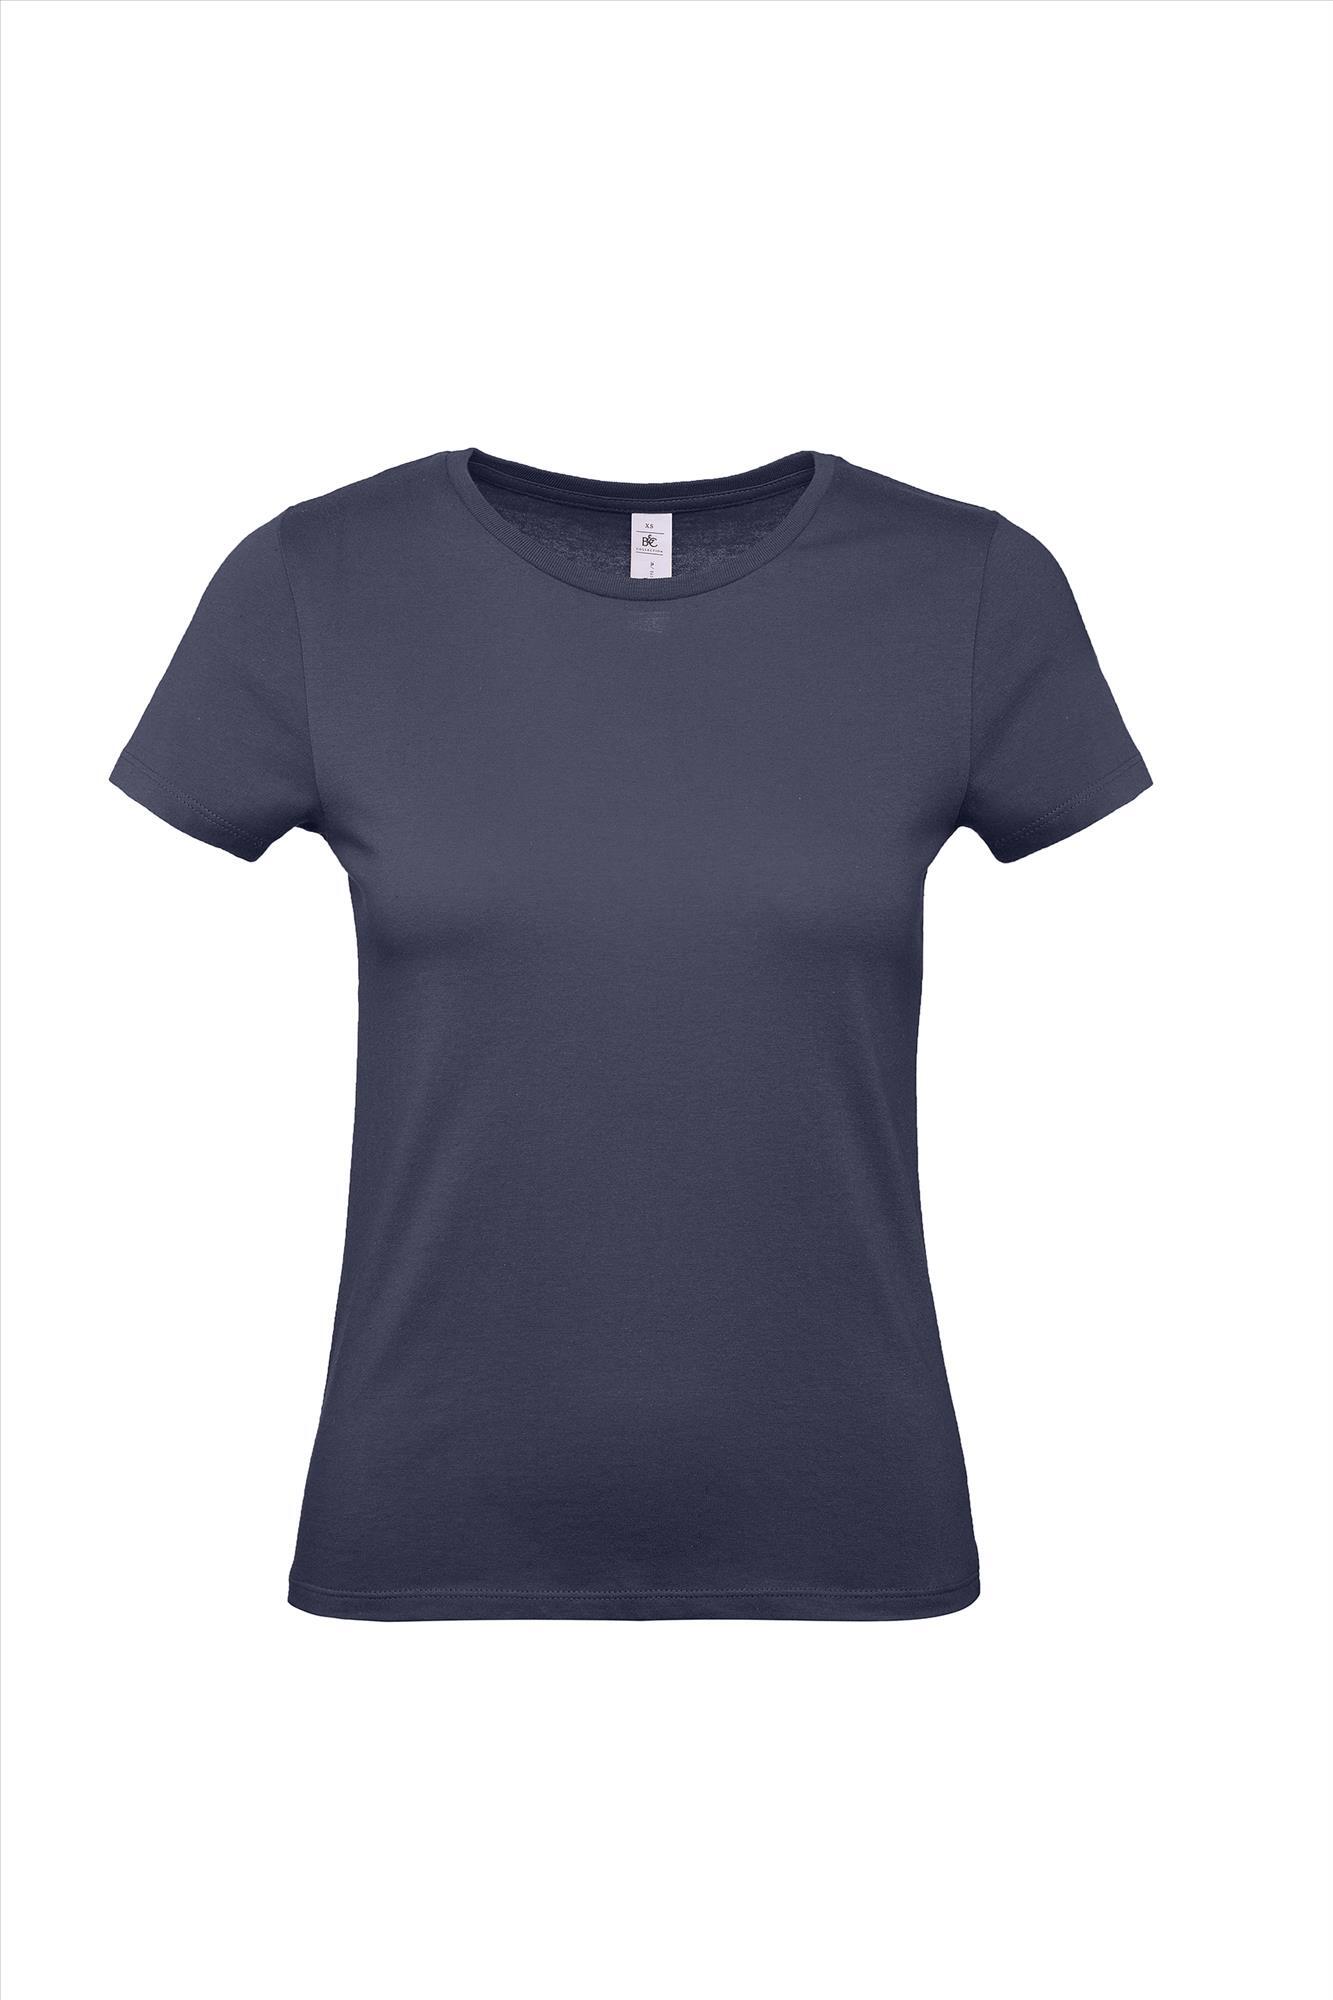 Modern T-shirt voor haar dames shirt urban donkerblauw